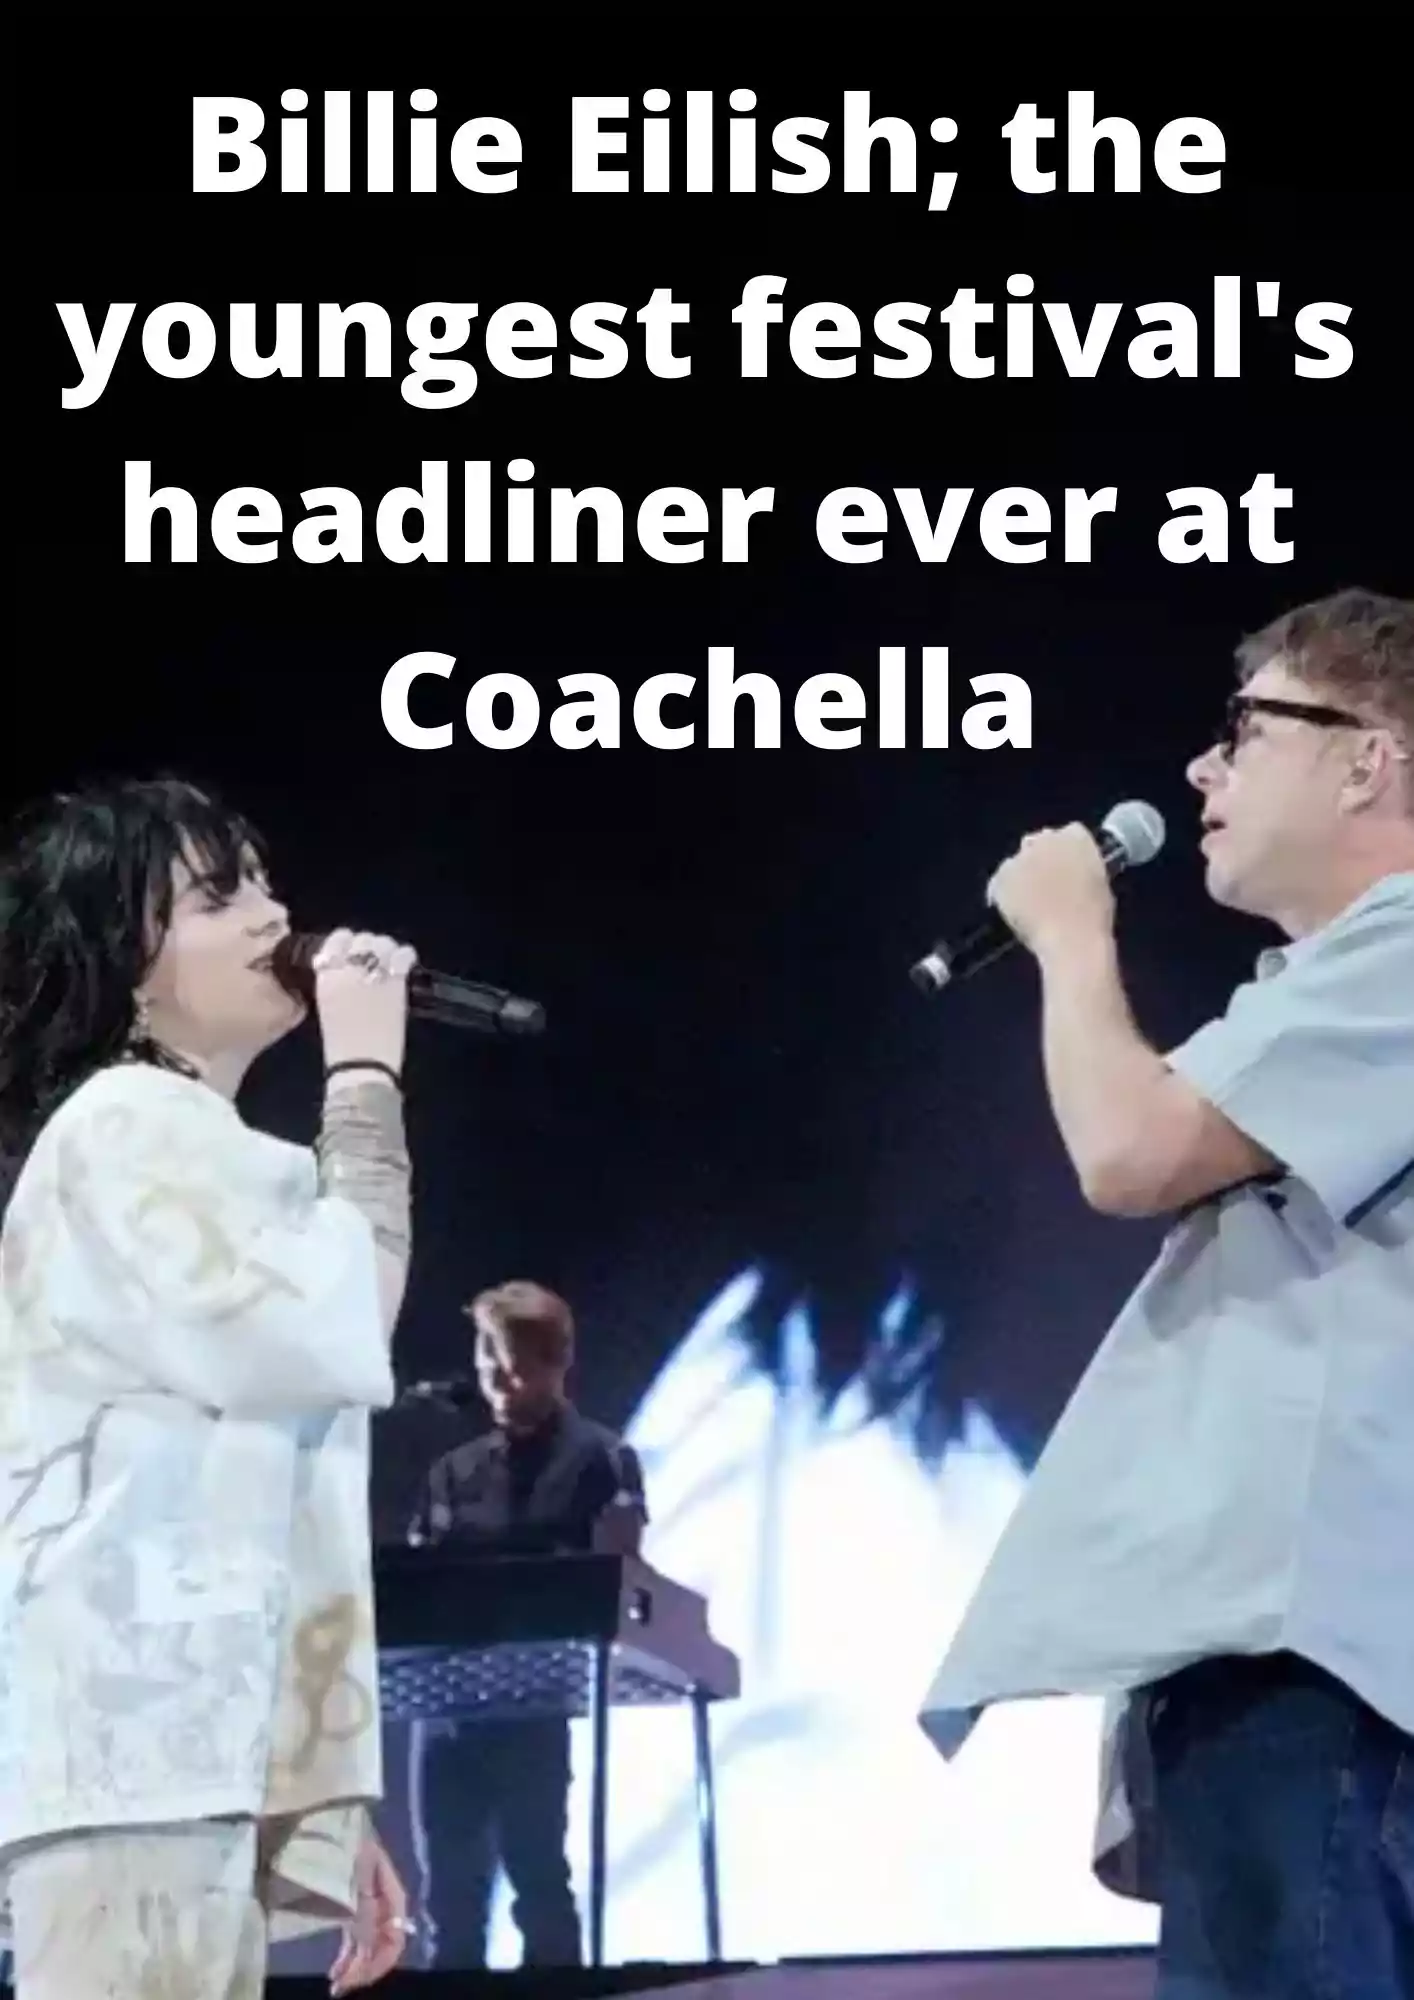 Singer Billie Eilish at her 20 is the youngest festival's headliner ever at Coachella. Billie Eilish headline coachella. Billie Eilish coachella 2022